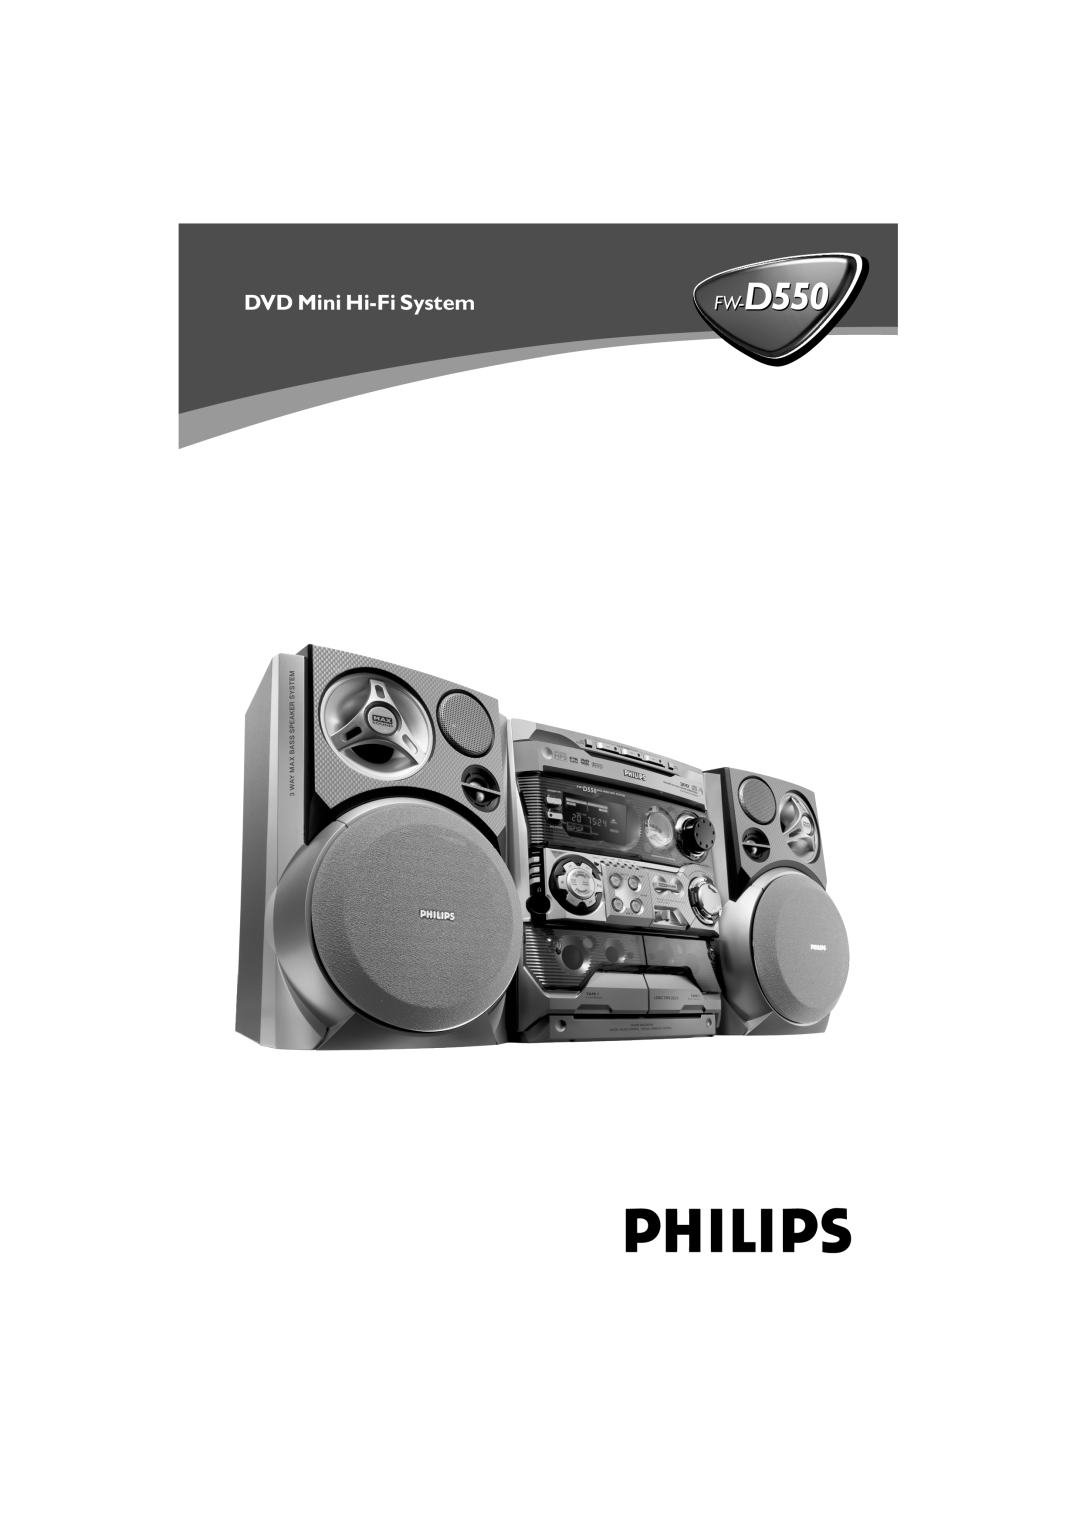 Philips FW-D550 manual DVD Mini Hi-FiSystem 